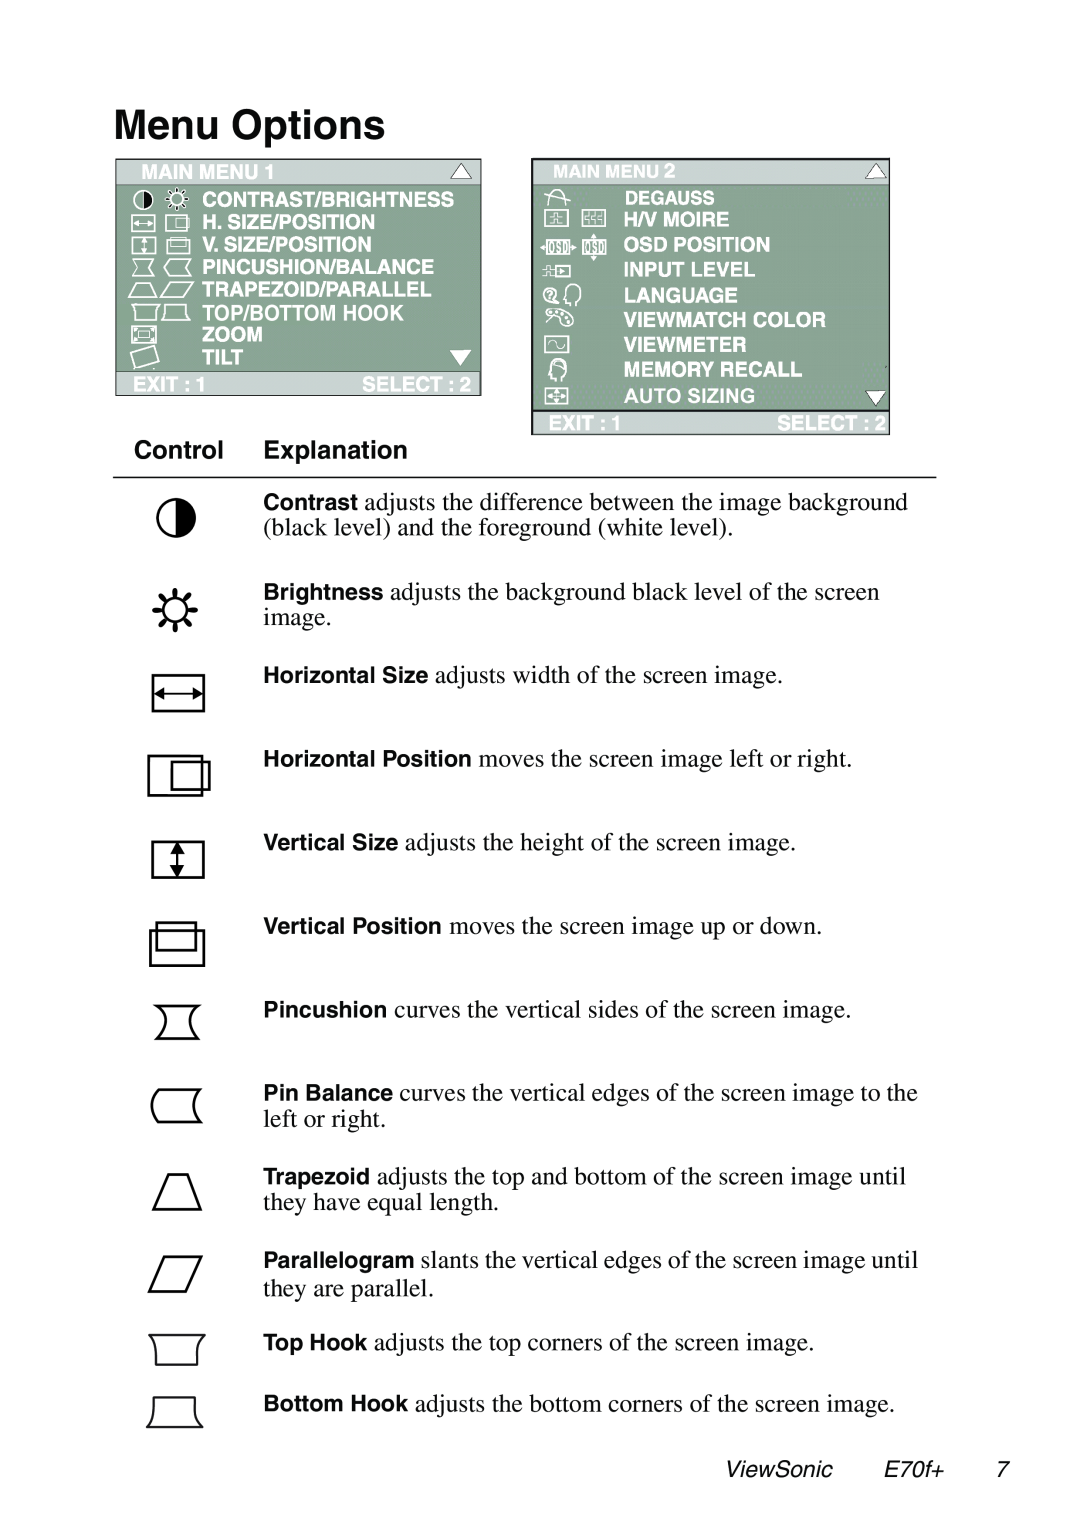 ViewSonic E70f+ manual Menu Options, Control Explanation 